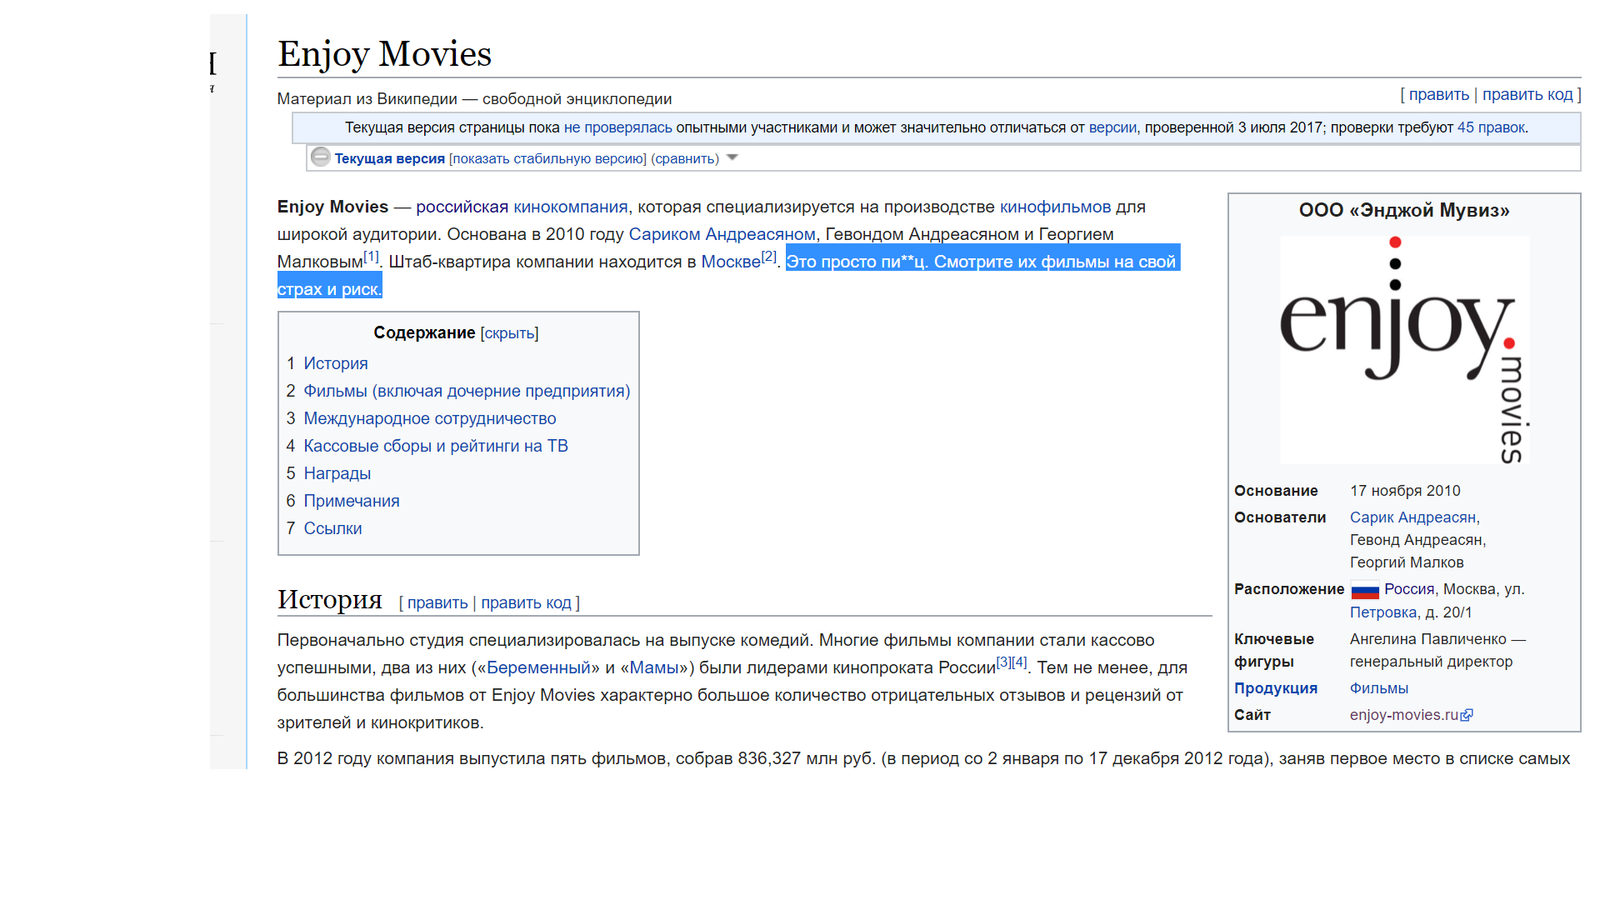 True... - Movies, Sarik Andreasyan, Studio Enjoy Movies, Wikipedia, Screenshot